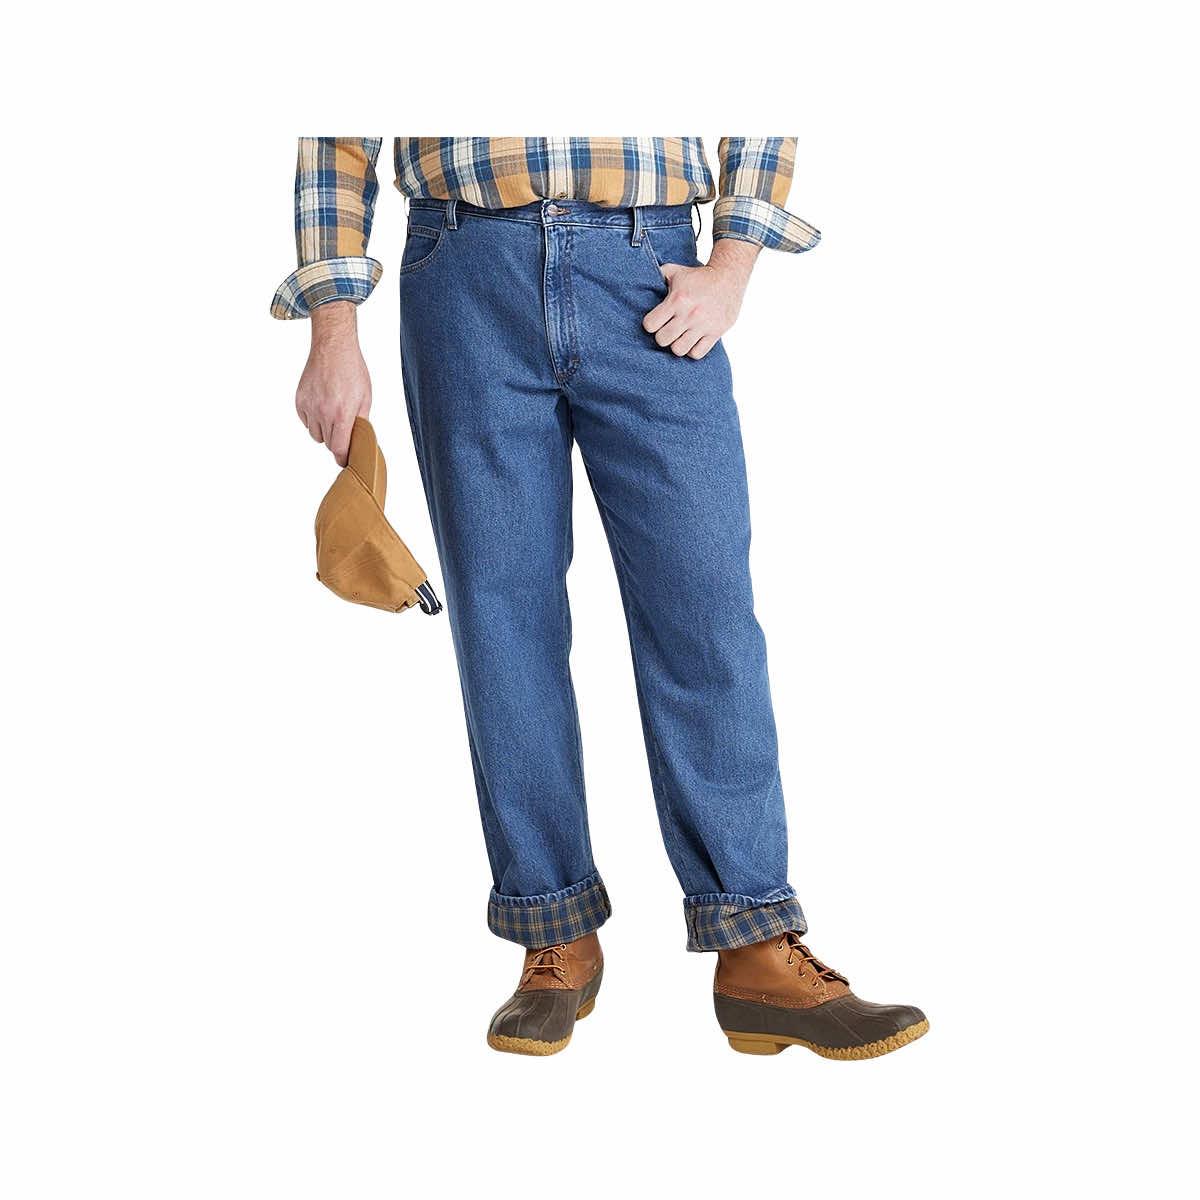 Original Mountain Flannel Lined Pants - Men's